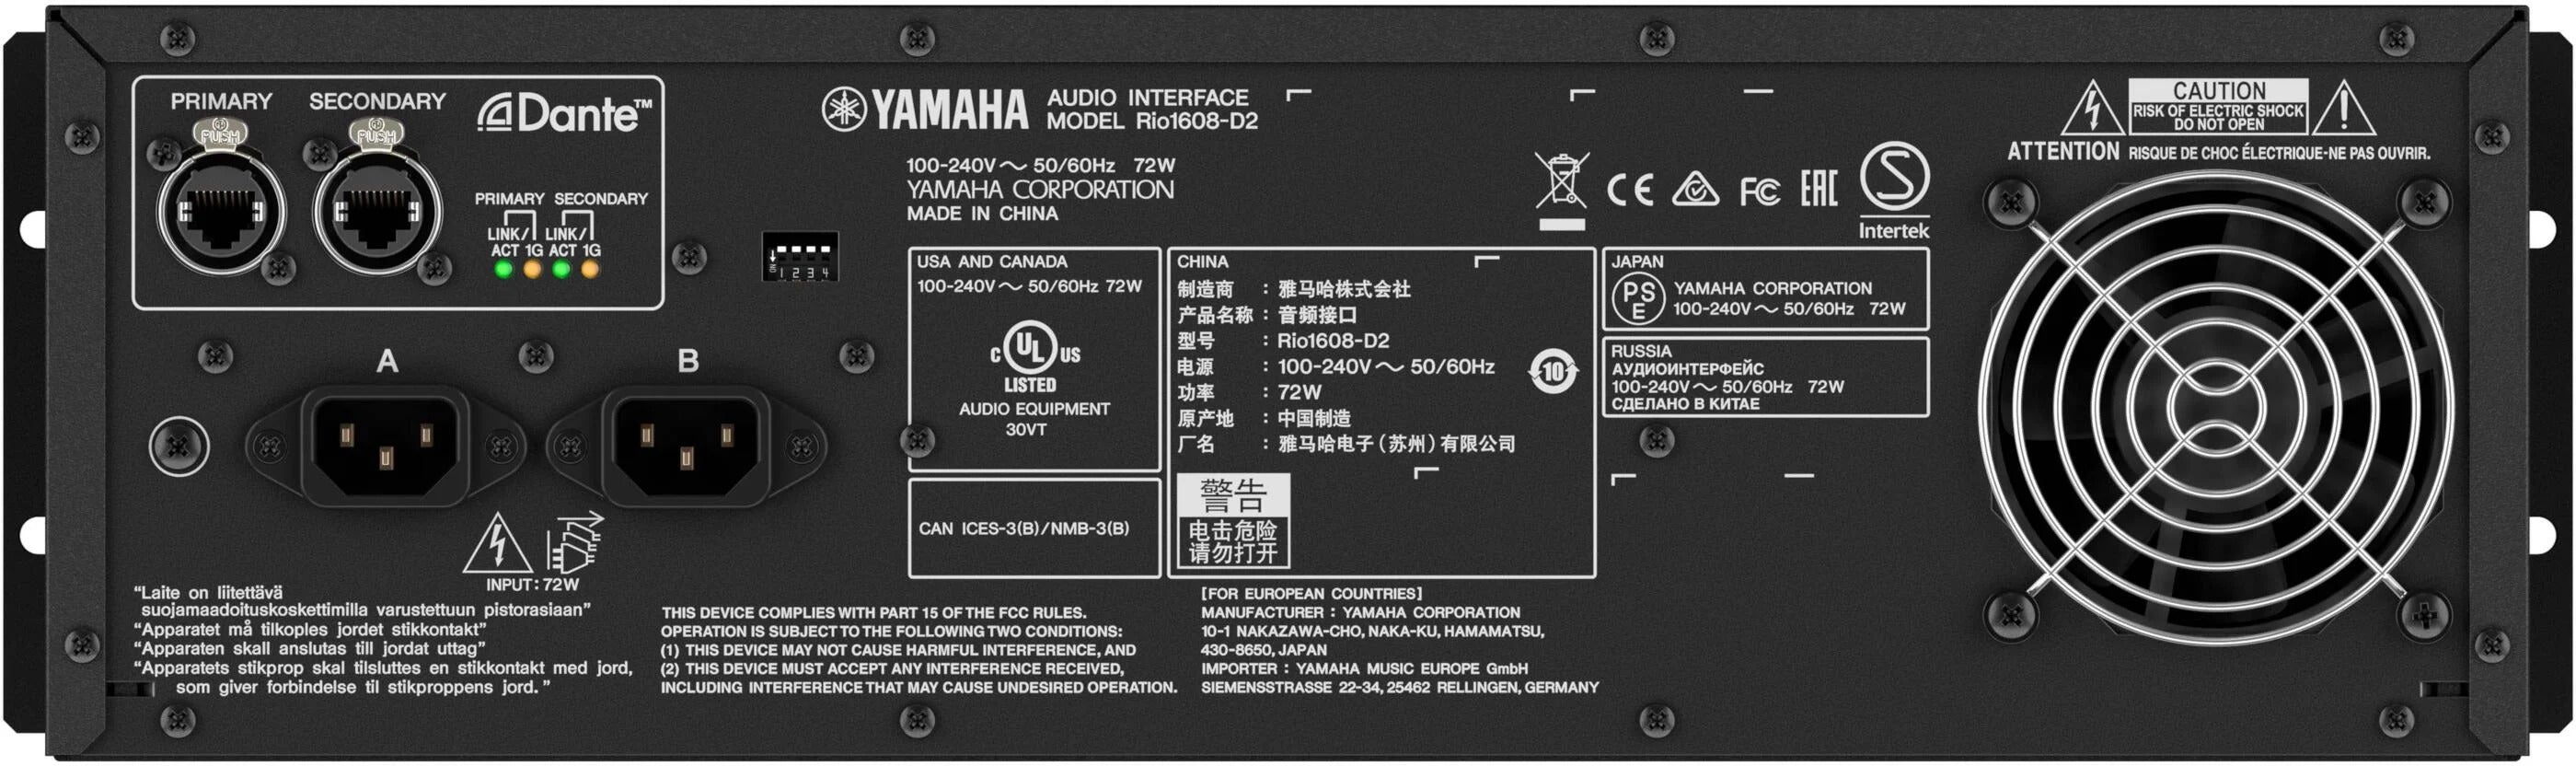 Yamaha RIO1608-D2, 16-Channel Digital Network Remote with Dante Yamaha